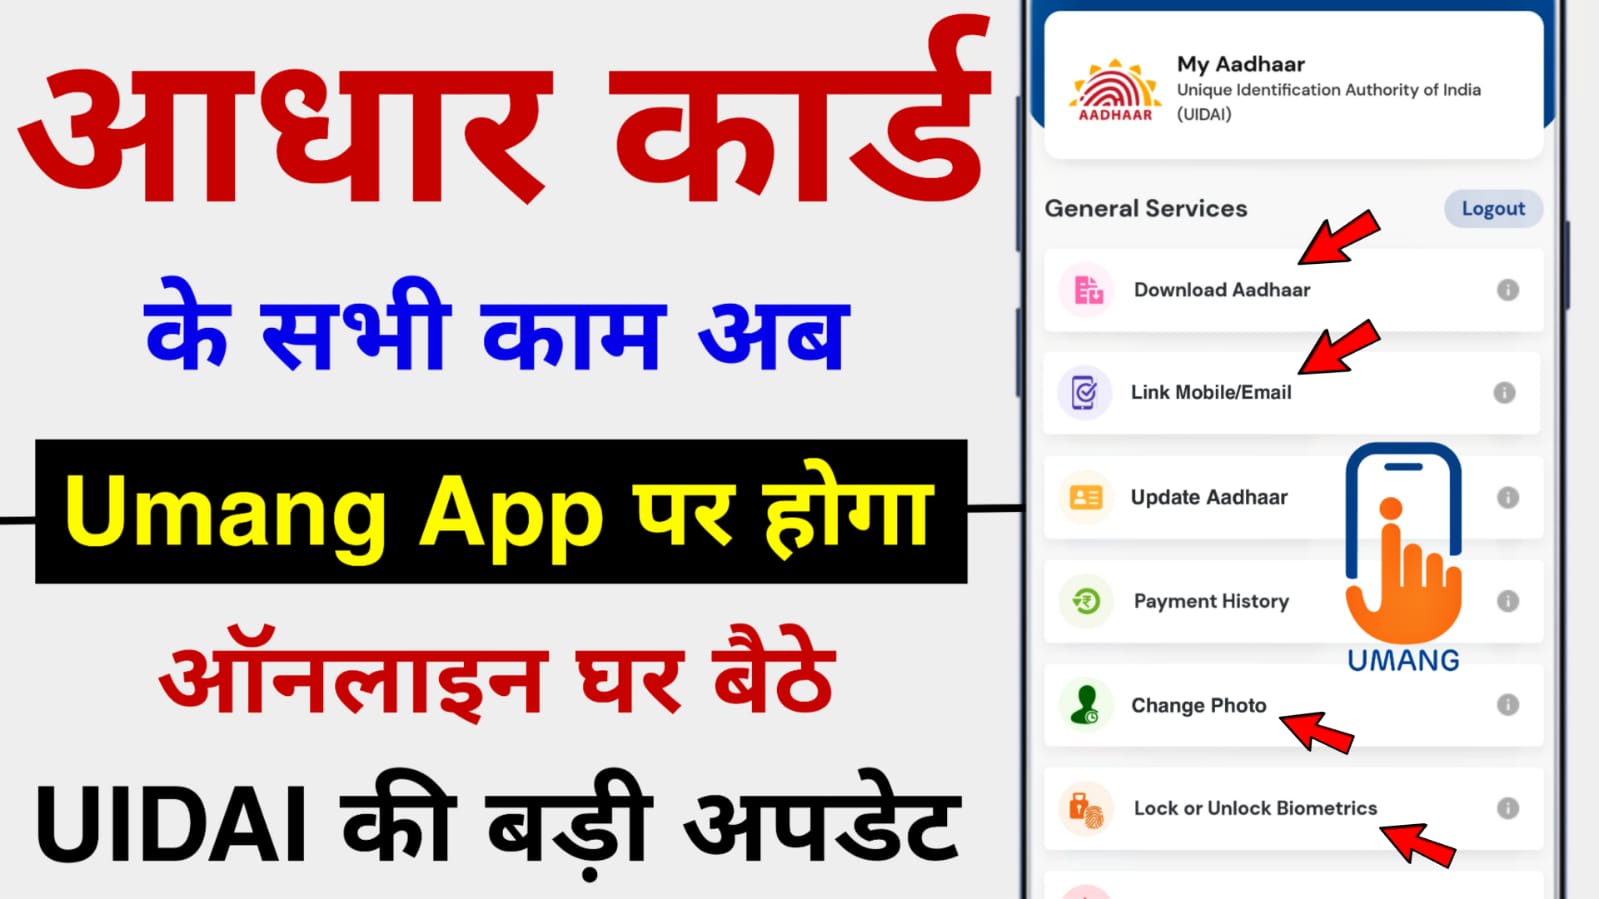 Aadhaar Services on Umang App